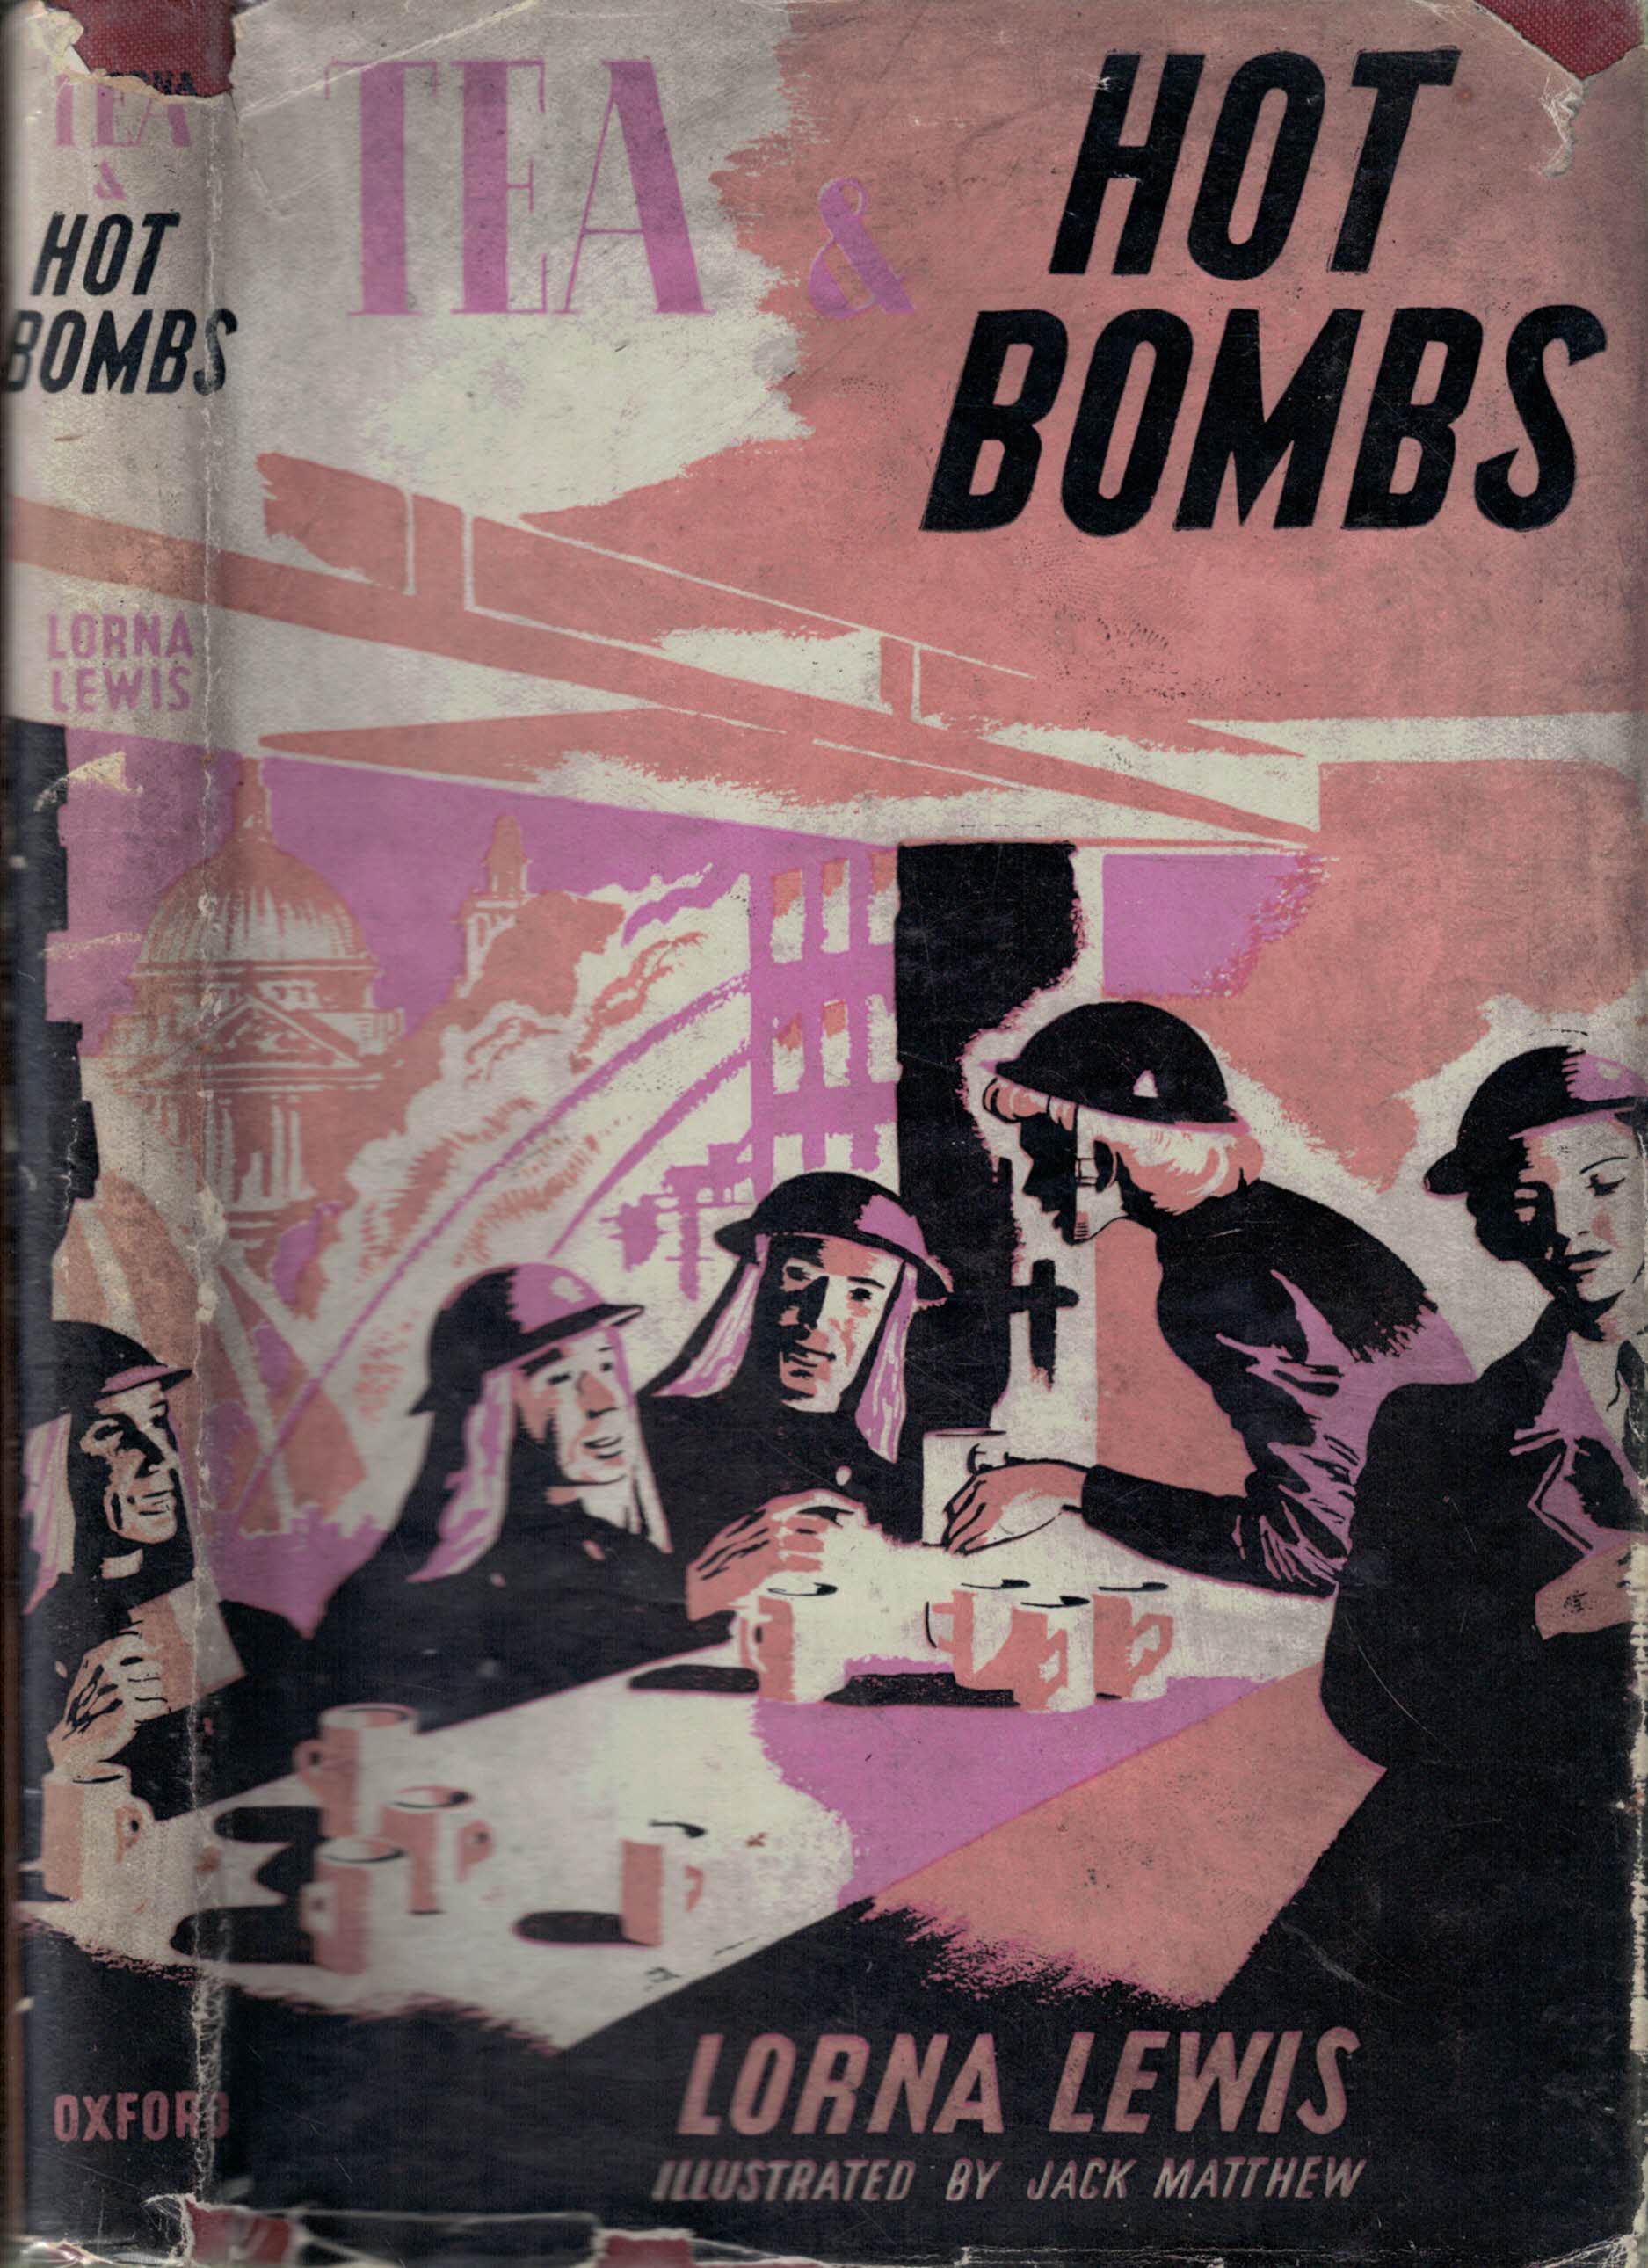 Tea and Hot Bombs